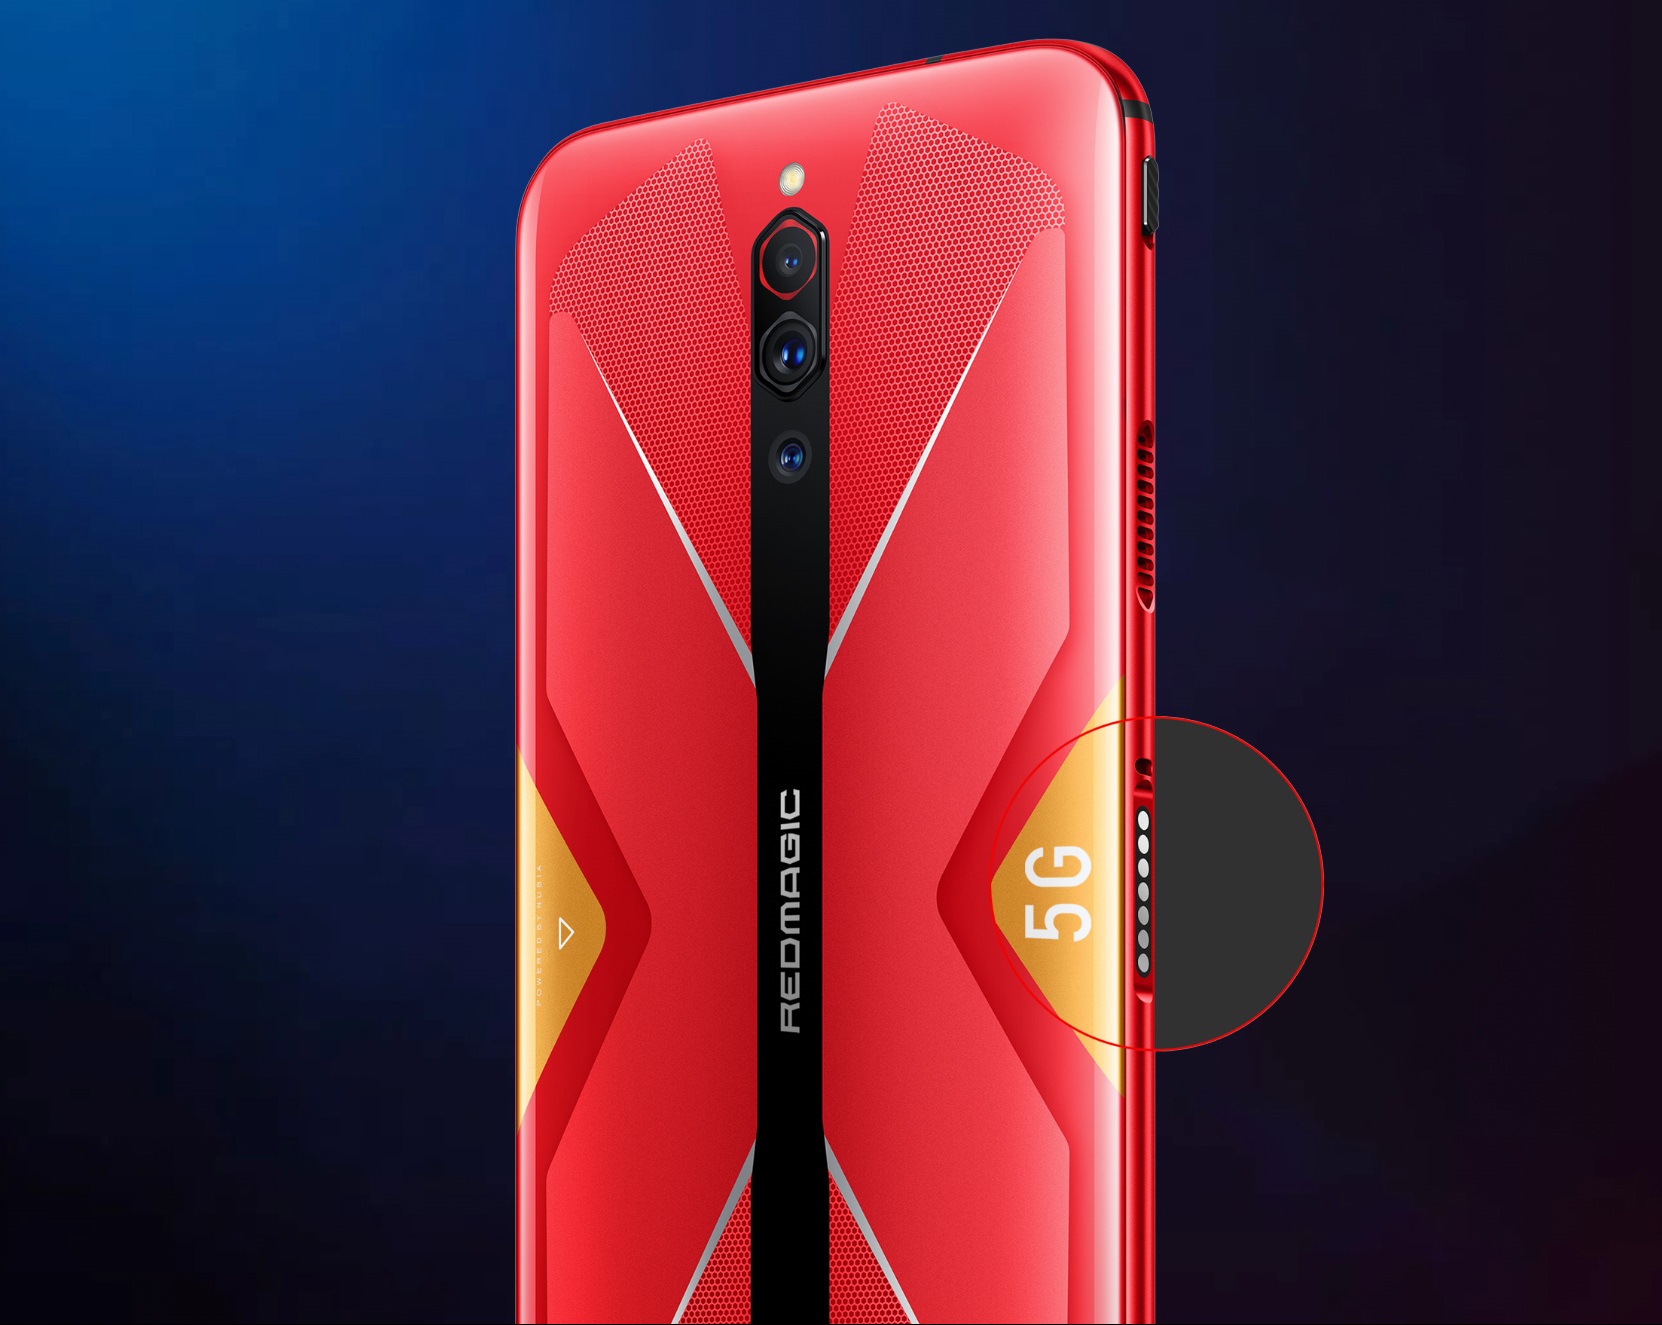 Nubia Red Magic 5G smartphone